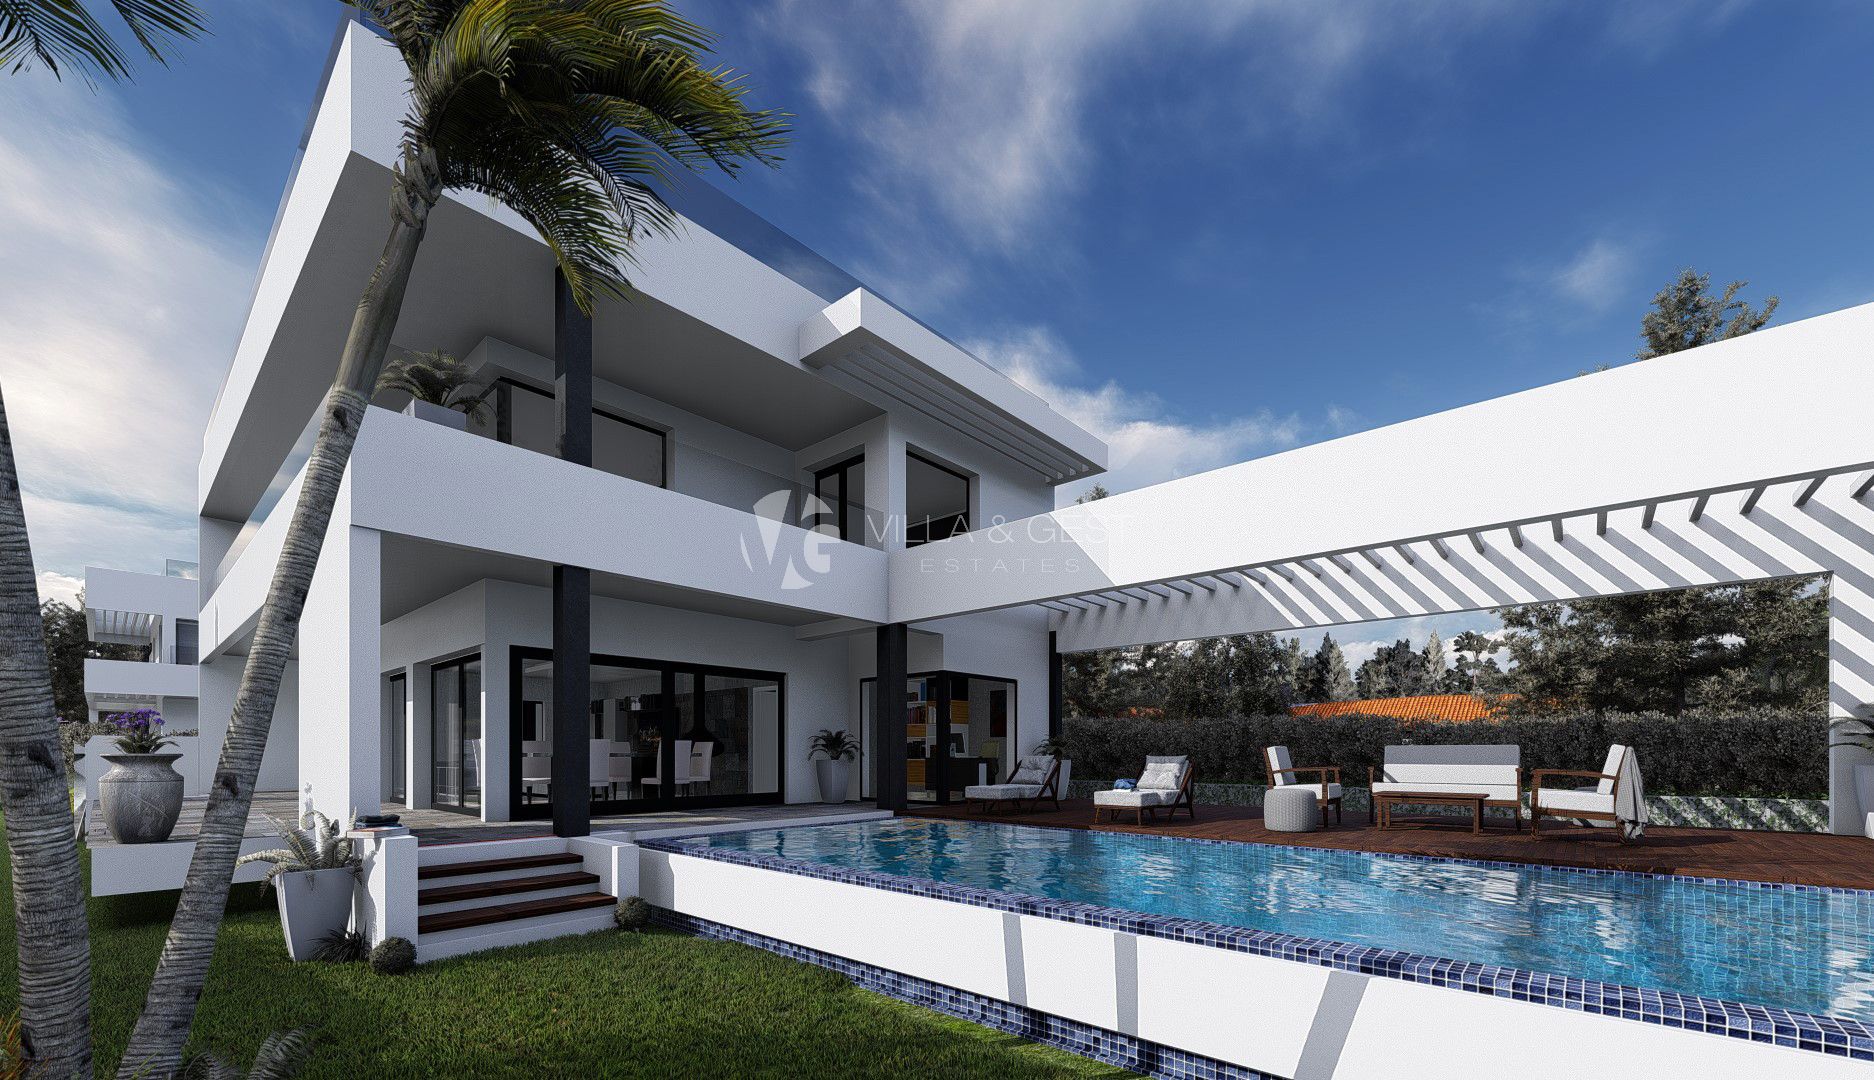 Puerto Marina Collection | BENALMADENA | Luxury villas by the sea, New Development in Benalmadena